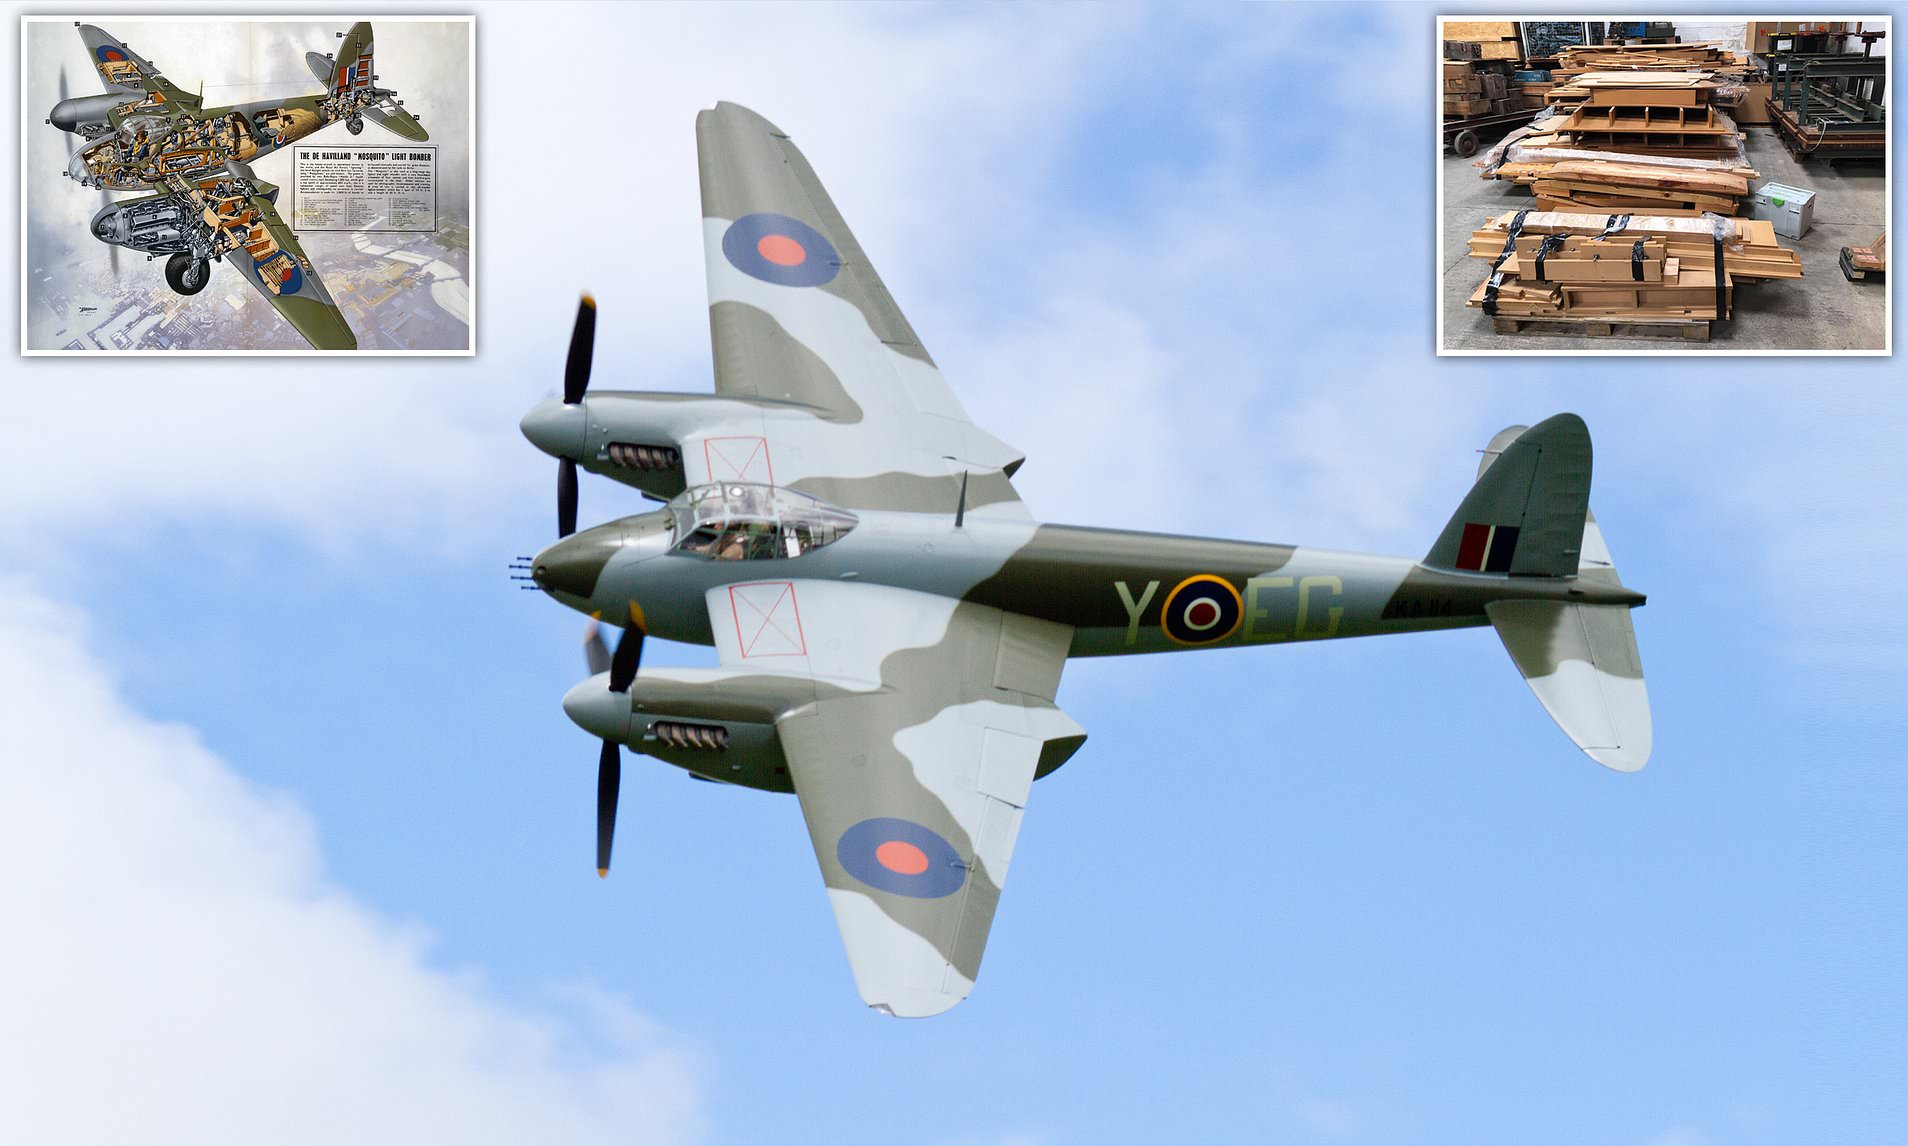 Mengulik sejarah dan desain Mosquito Aircraft pada Perang Dunia II